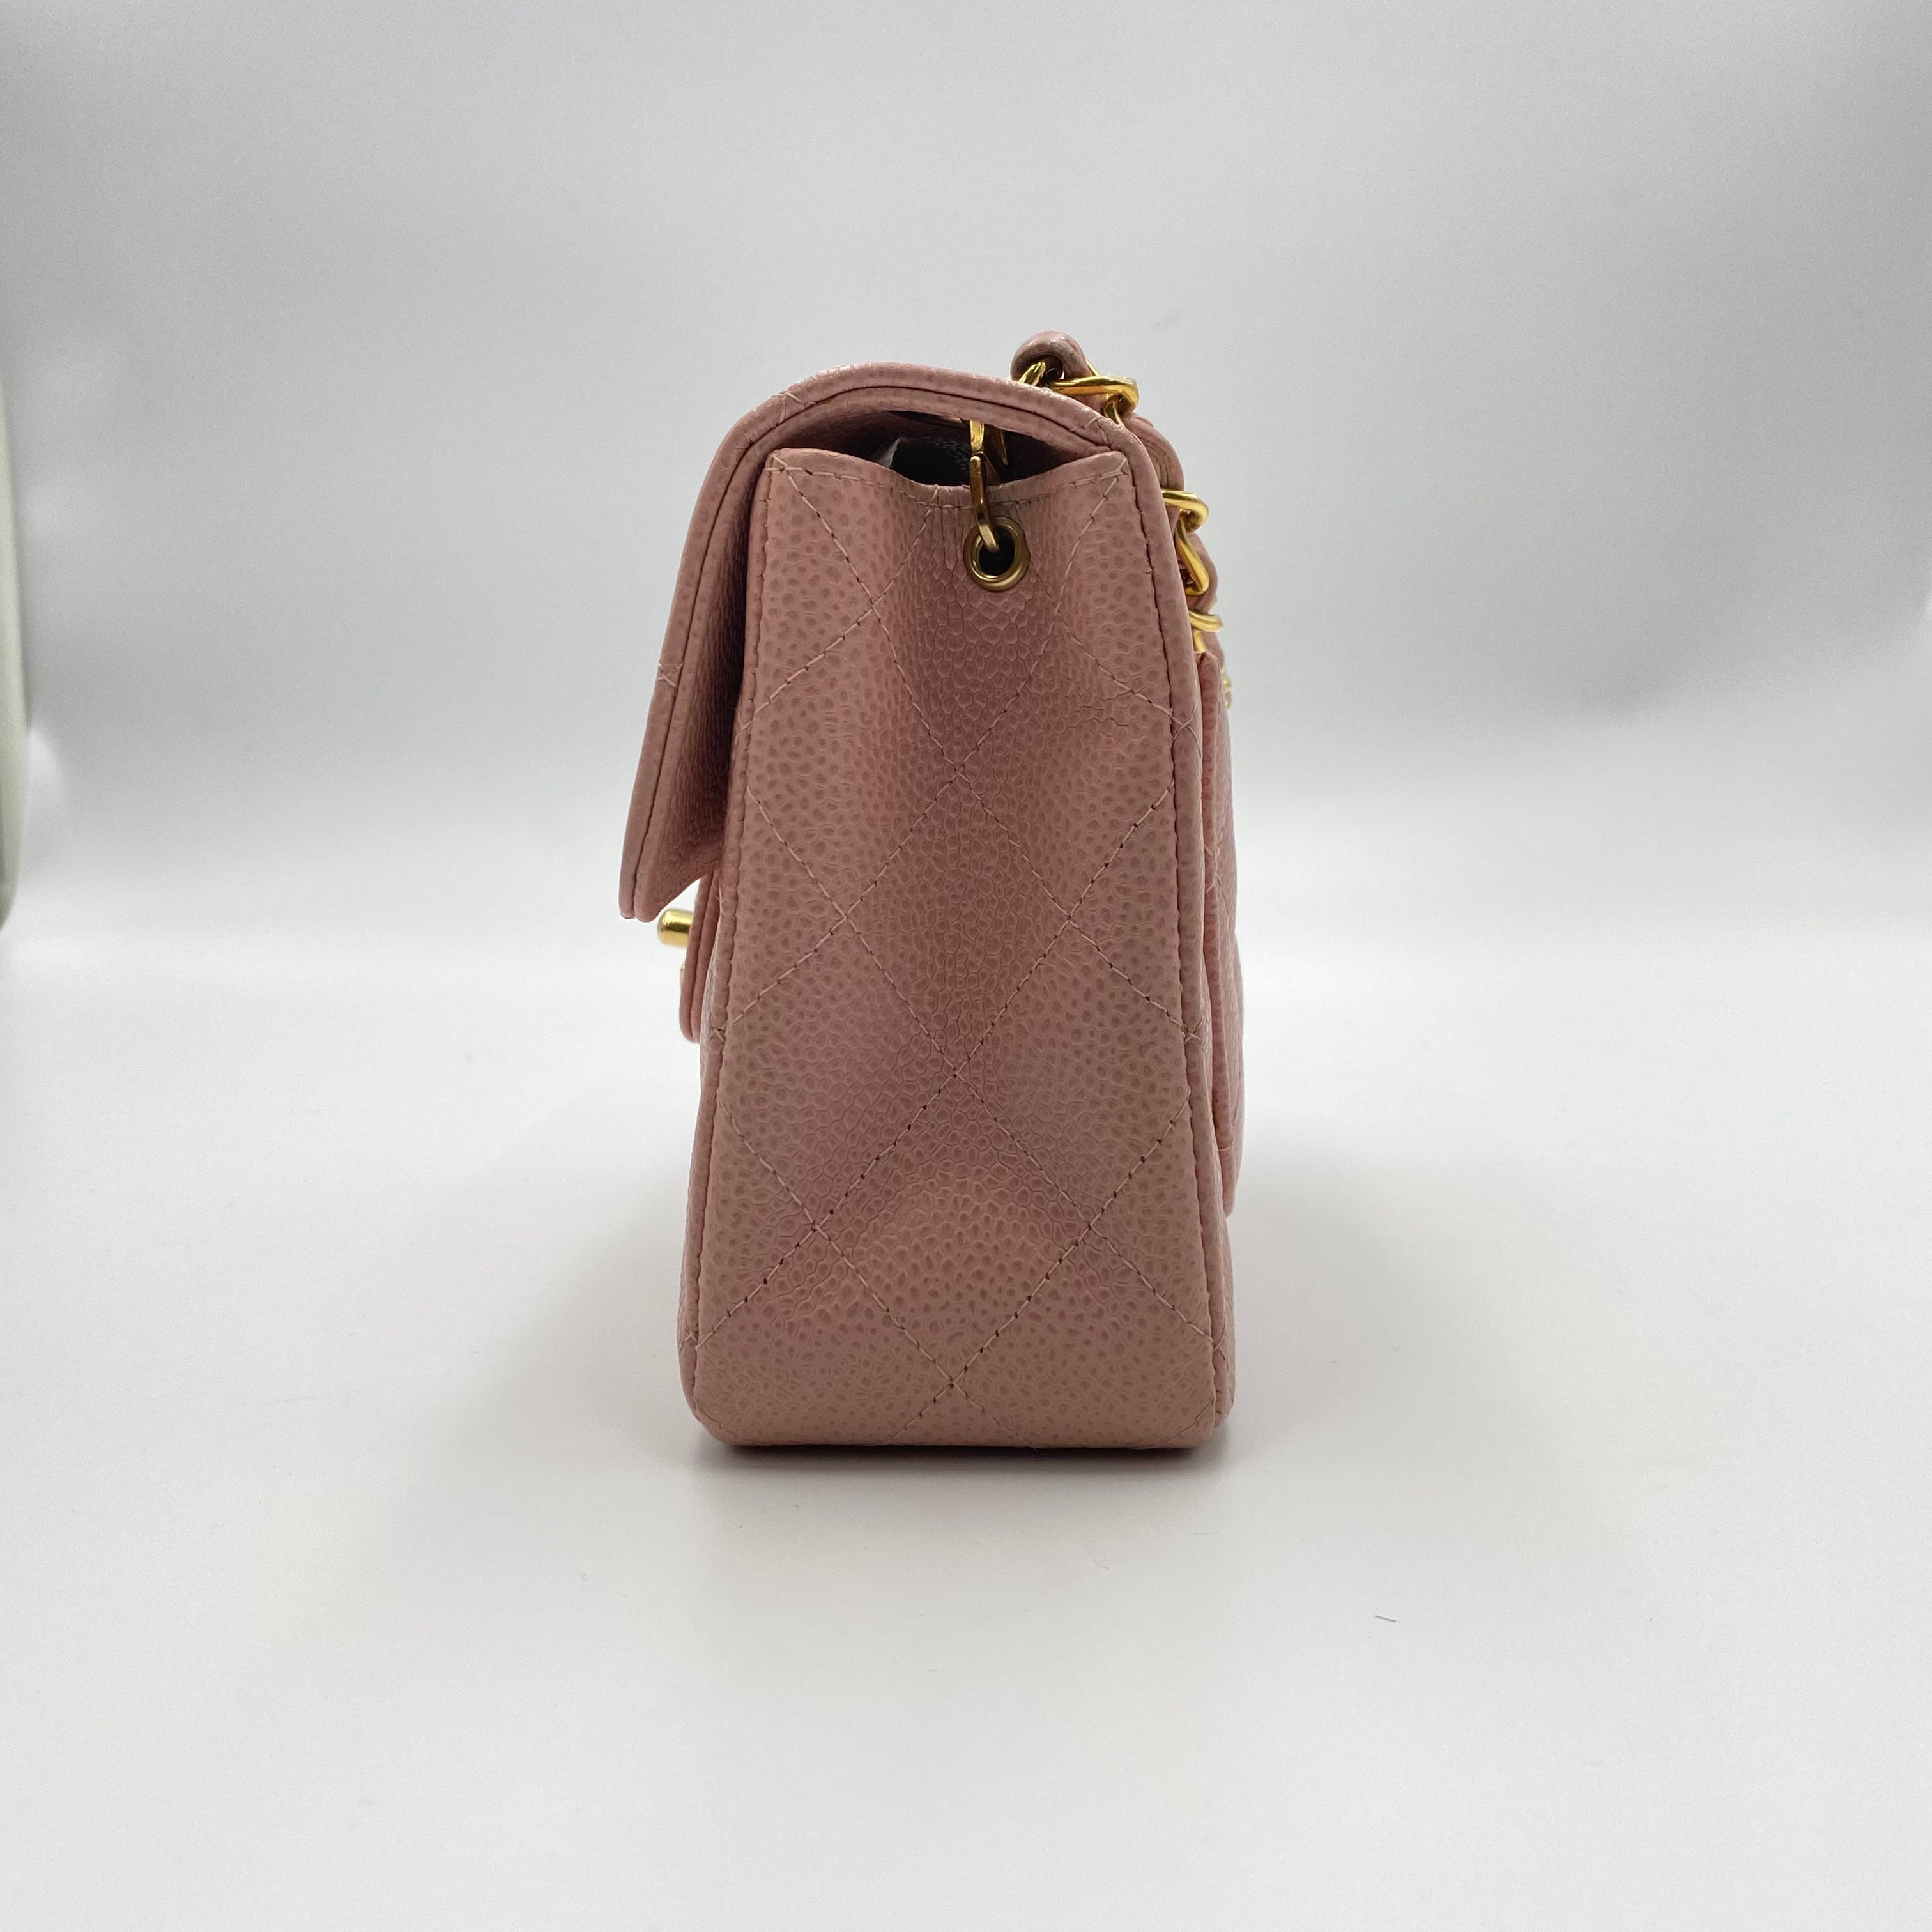 Chanel CHANEL VINTAGE MINI SQUARE 17 CHAIN SHOULDER BAG PINK CAVIAR SKIN 90216497